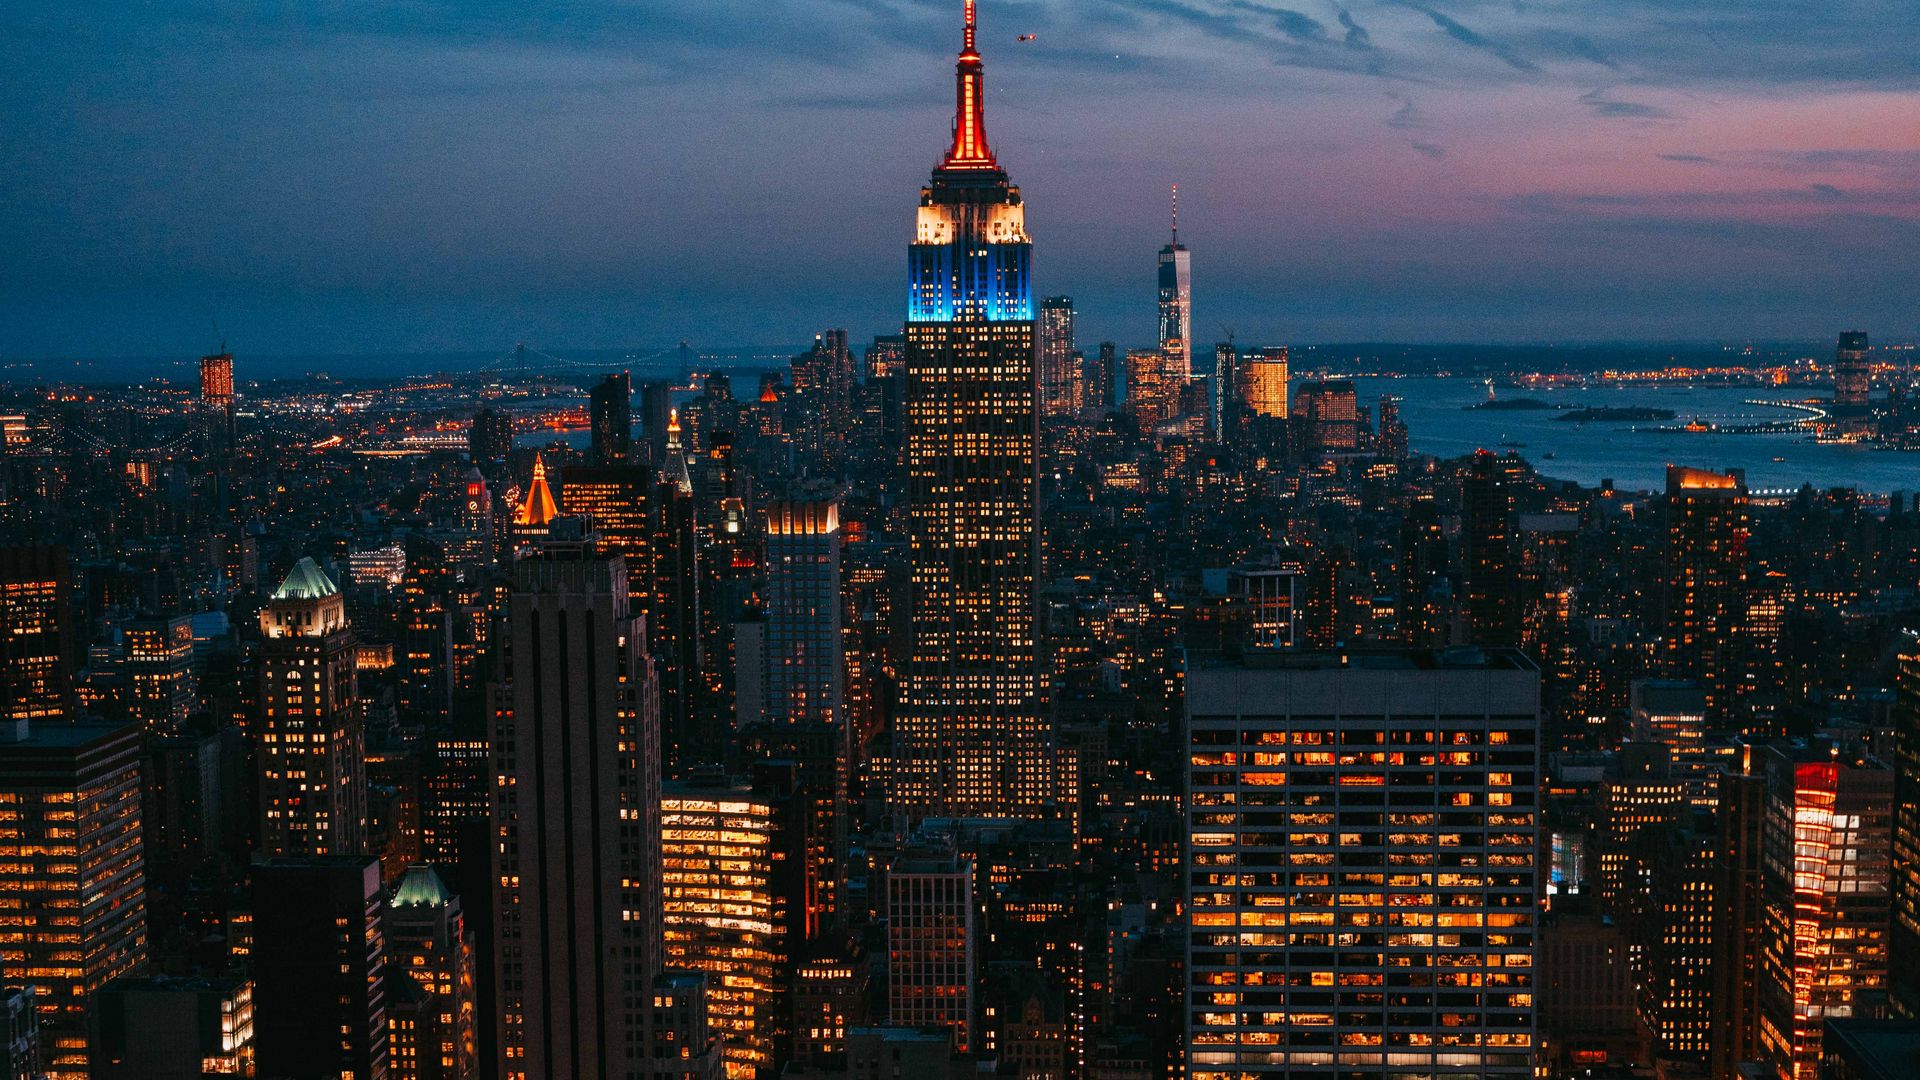 Download wallpaper 1920x1080 night city, city lights, skyscraper, new york, metropolis, top view, usa full hd, hdtv, fhd, 1080p HD background